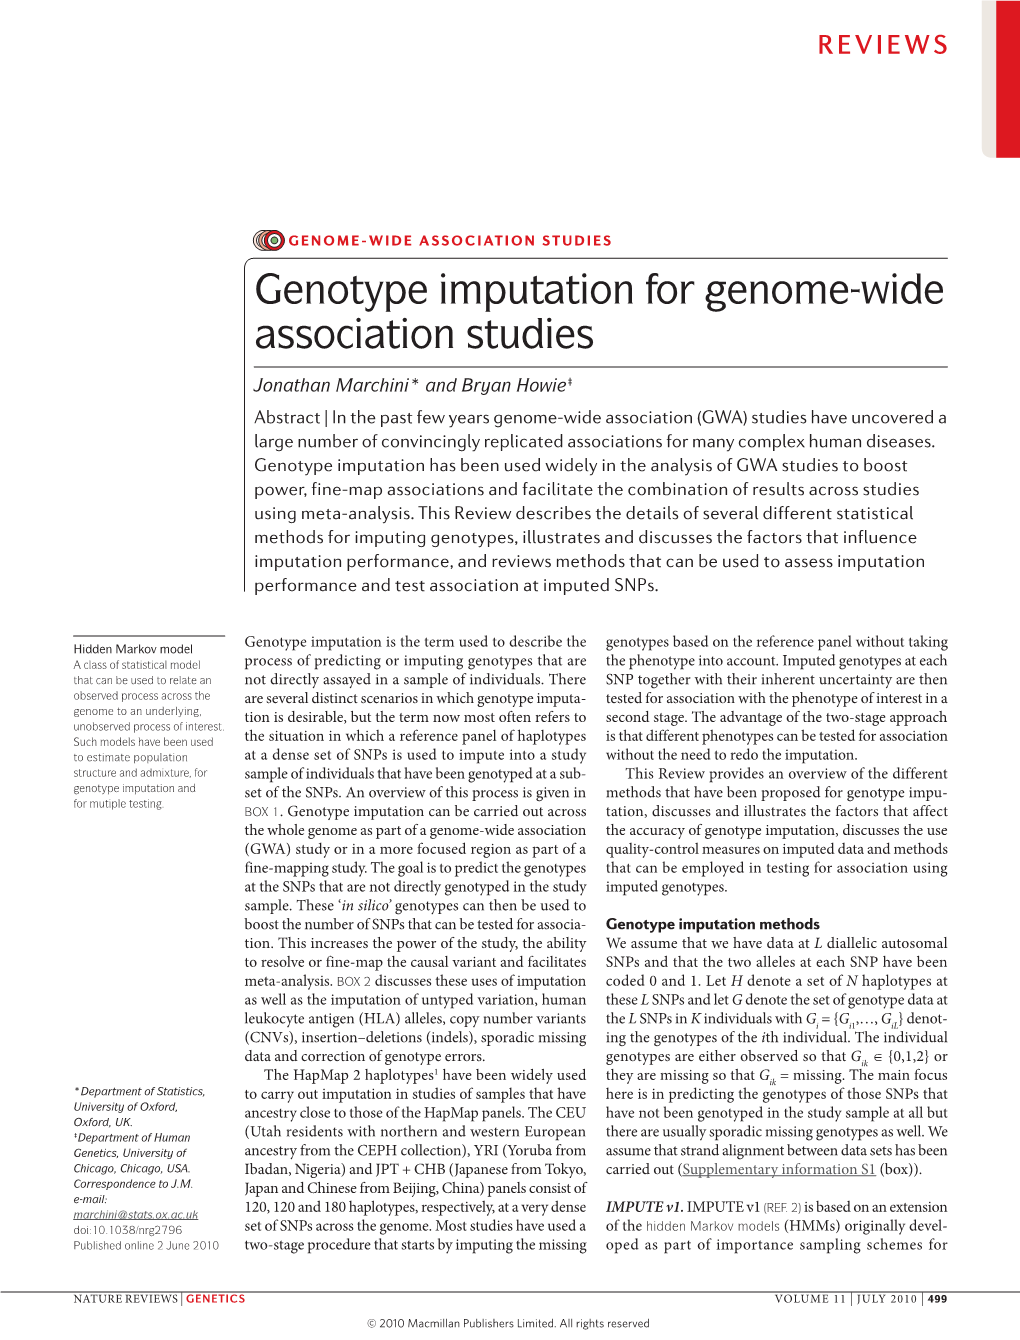 Genotype Imputation for Genome-Wide Association Studies